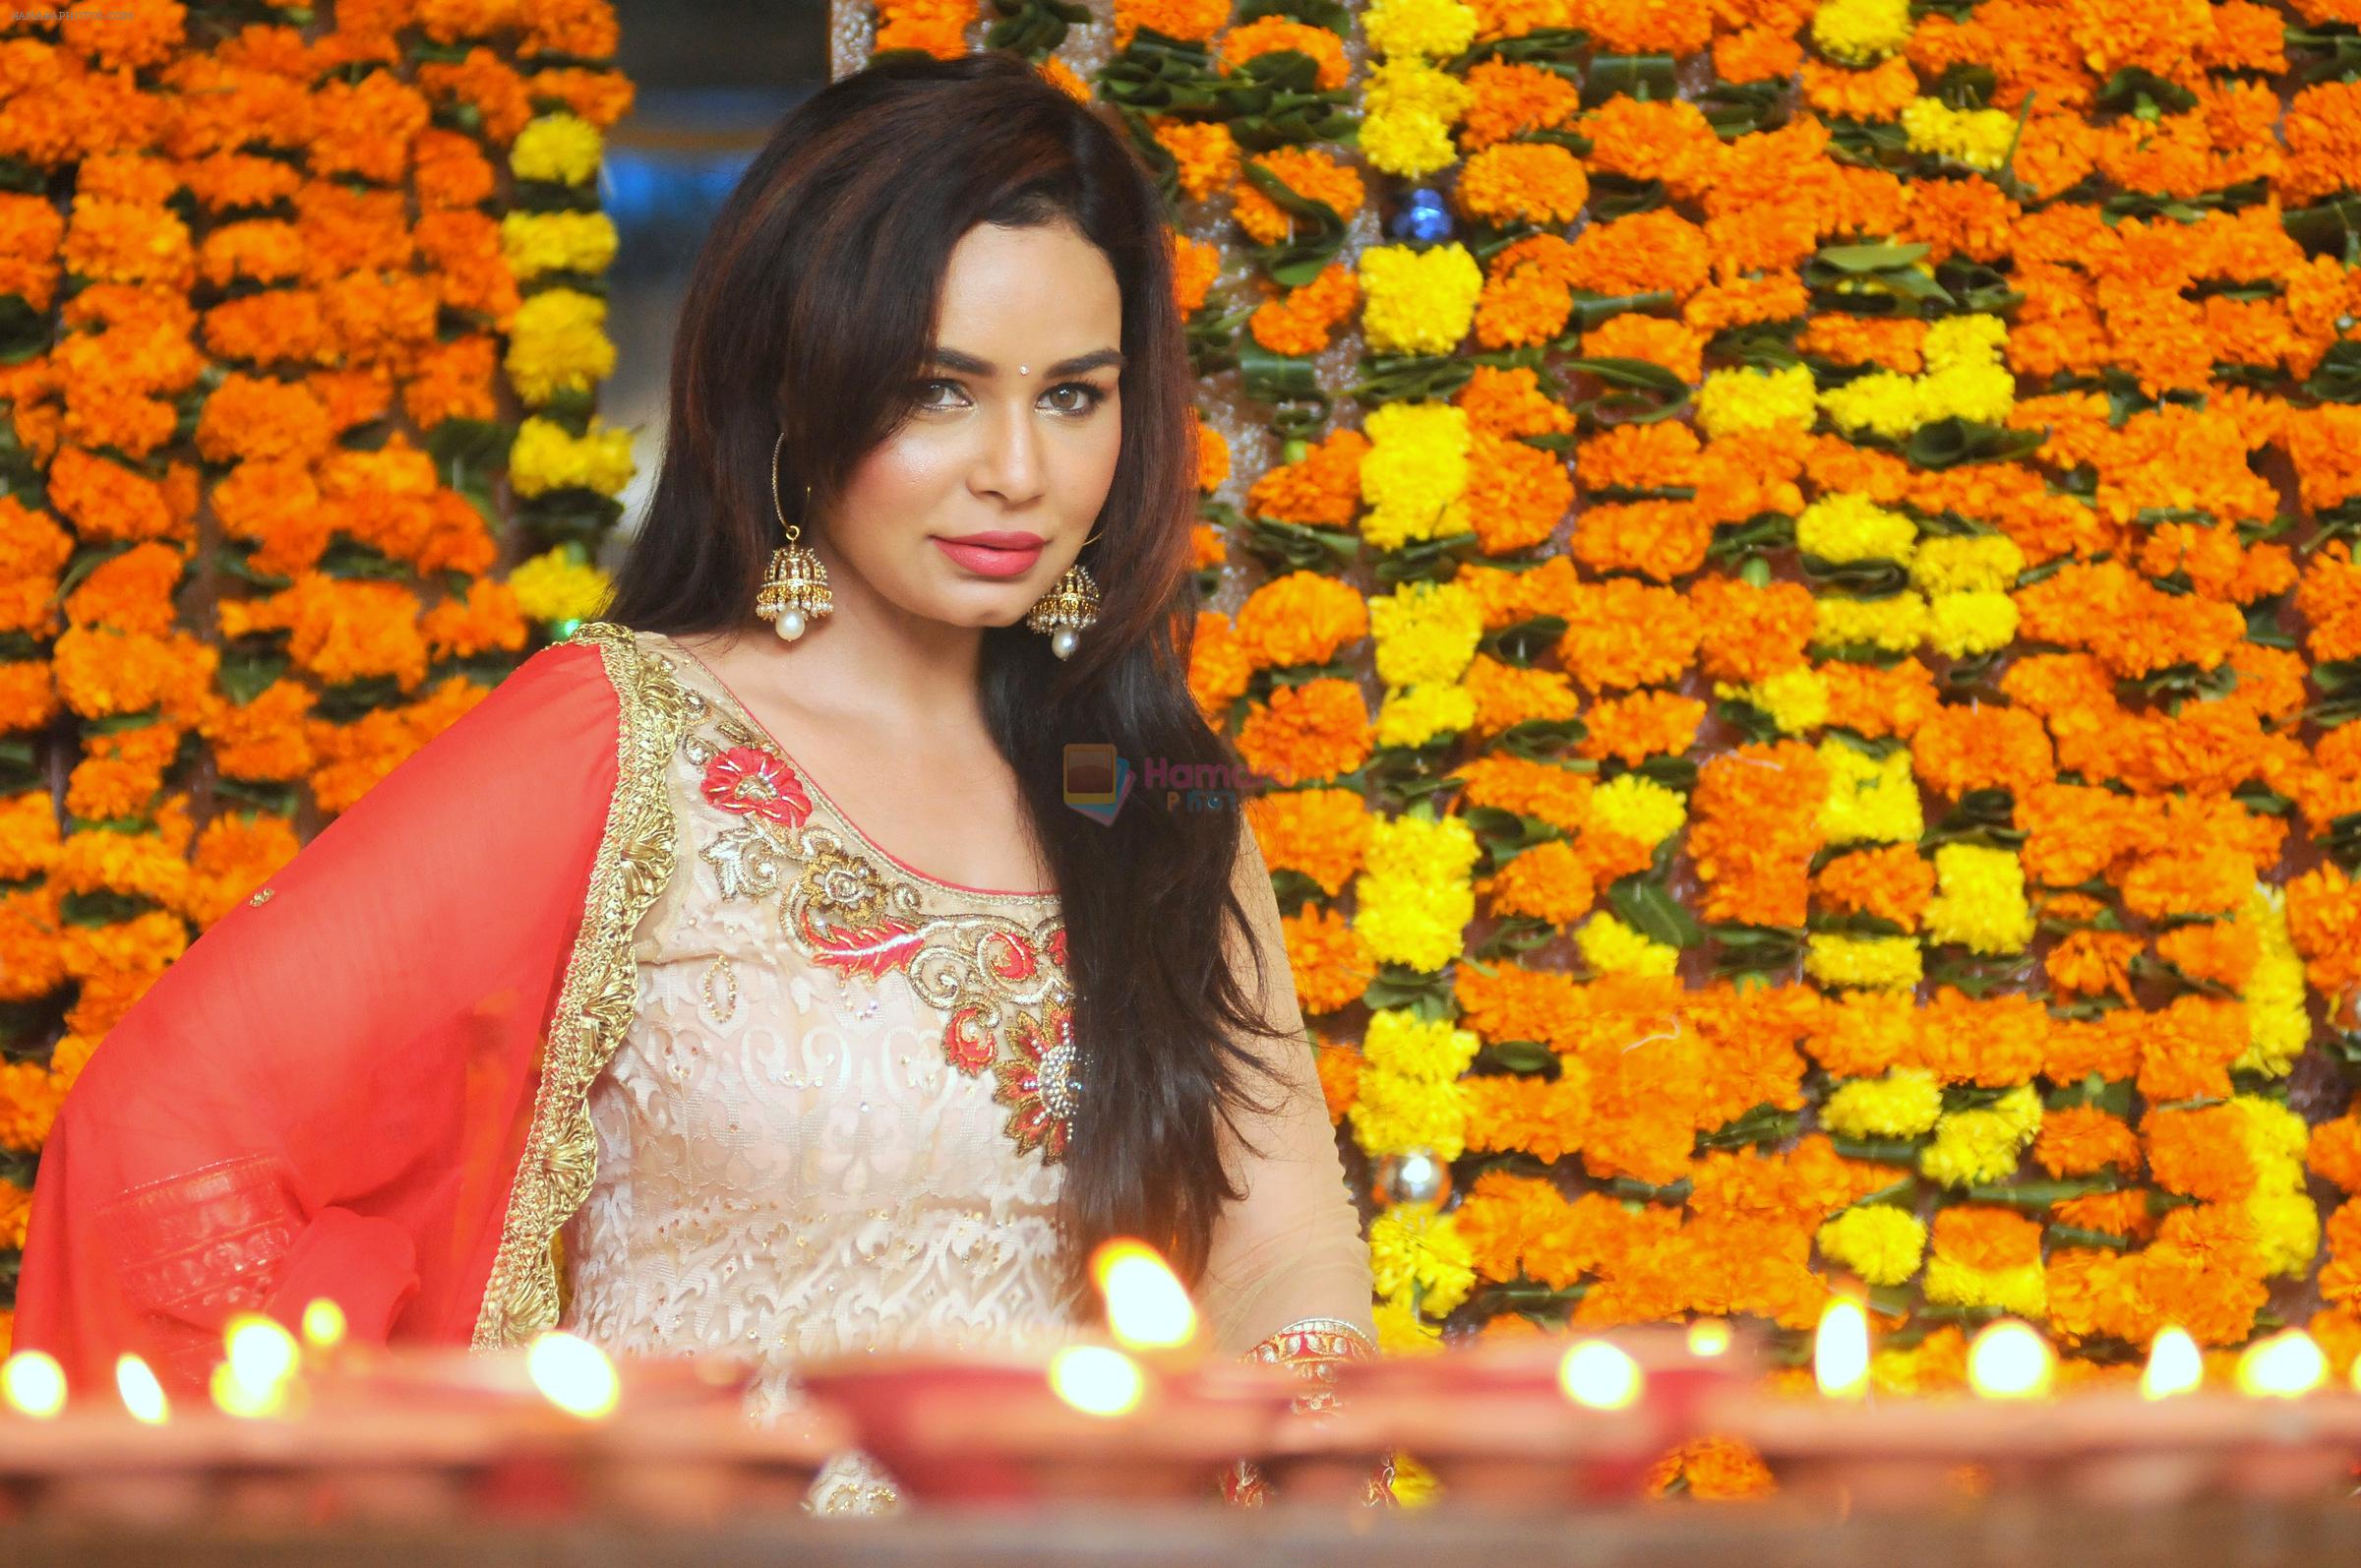 Kavitta Verma caught in candid celebrating Indian festival DIWALI on 21st Oct 2014